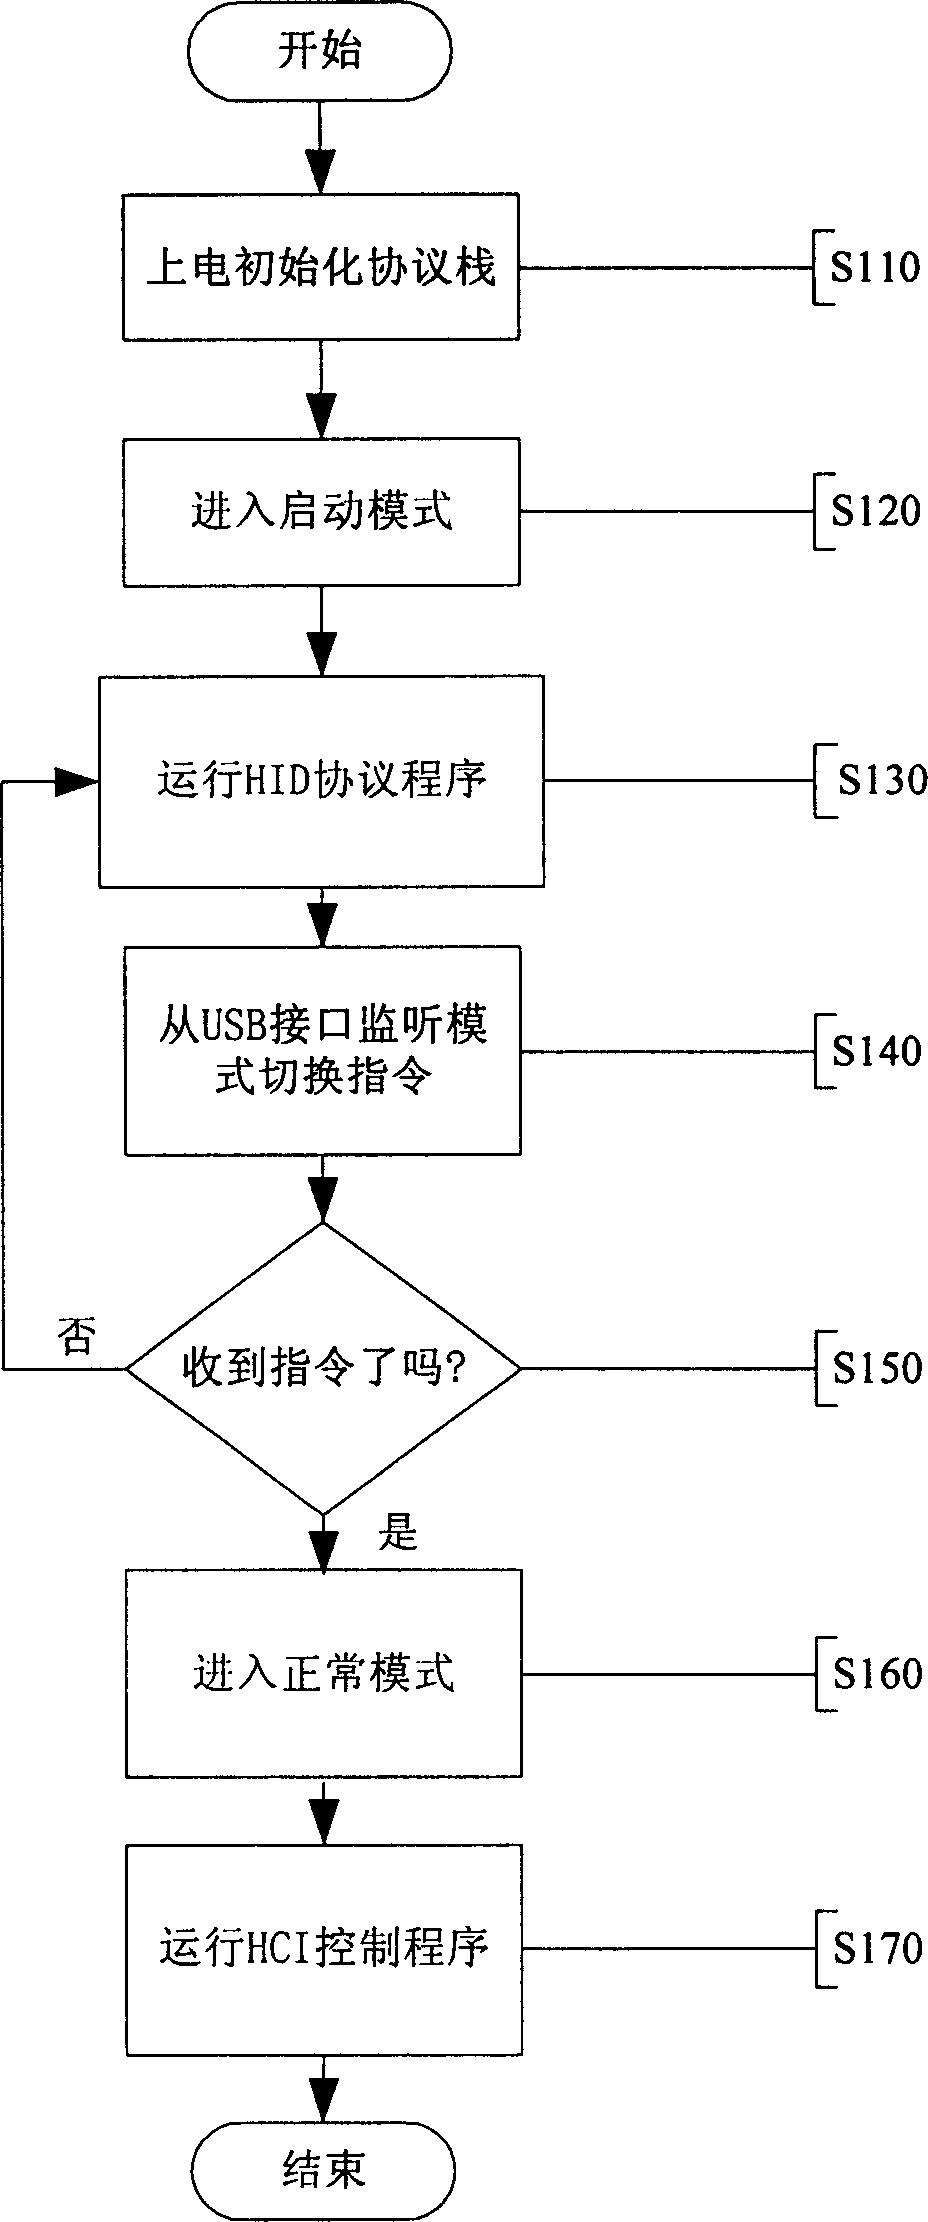 Method of making bluetooth USB adaptor having man-machine interaction function